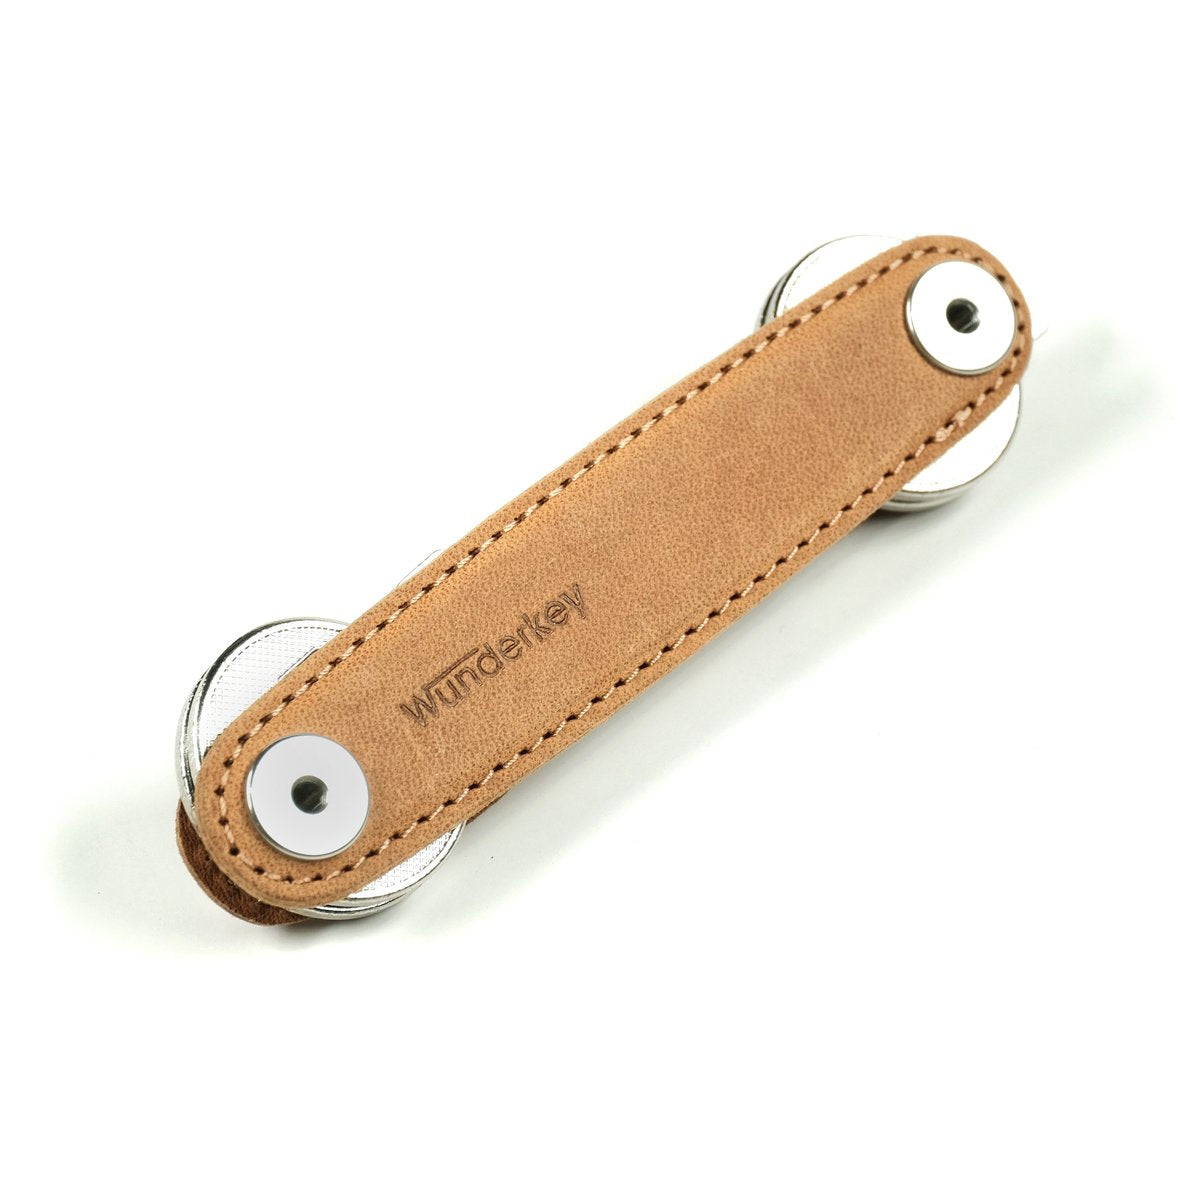 Wunderkey keychain 2.0 - leather